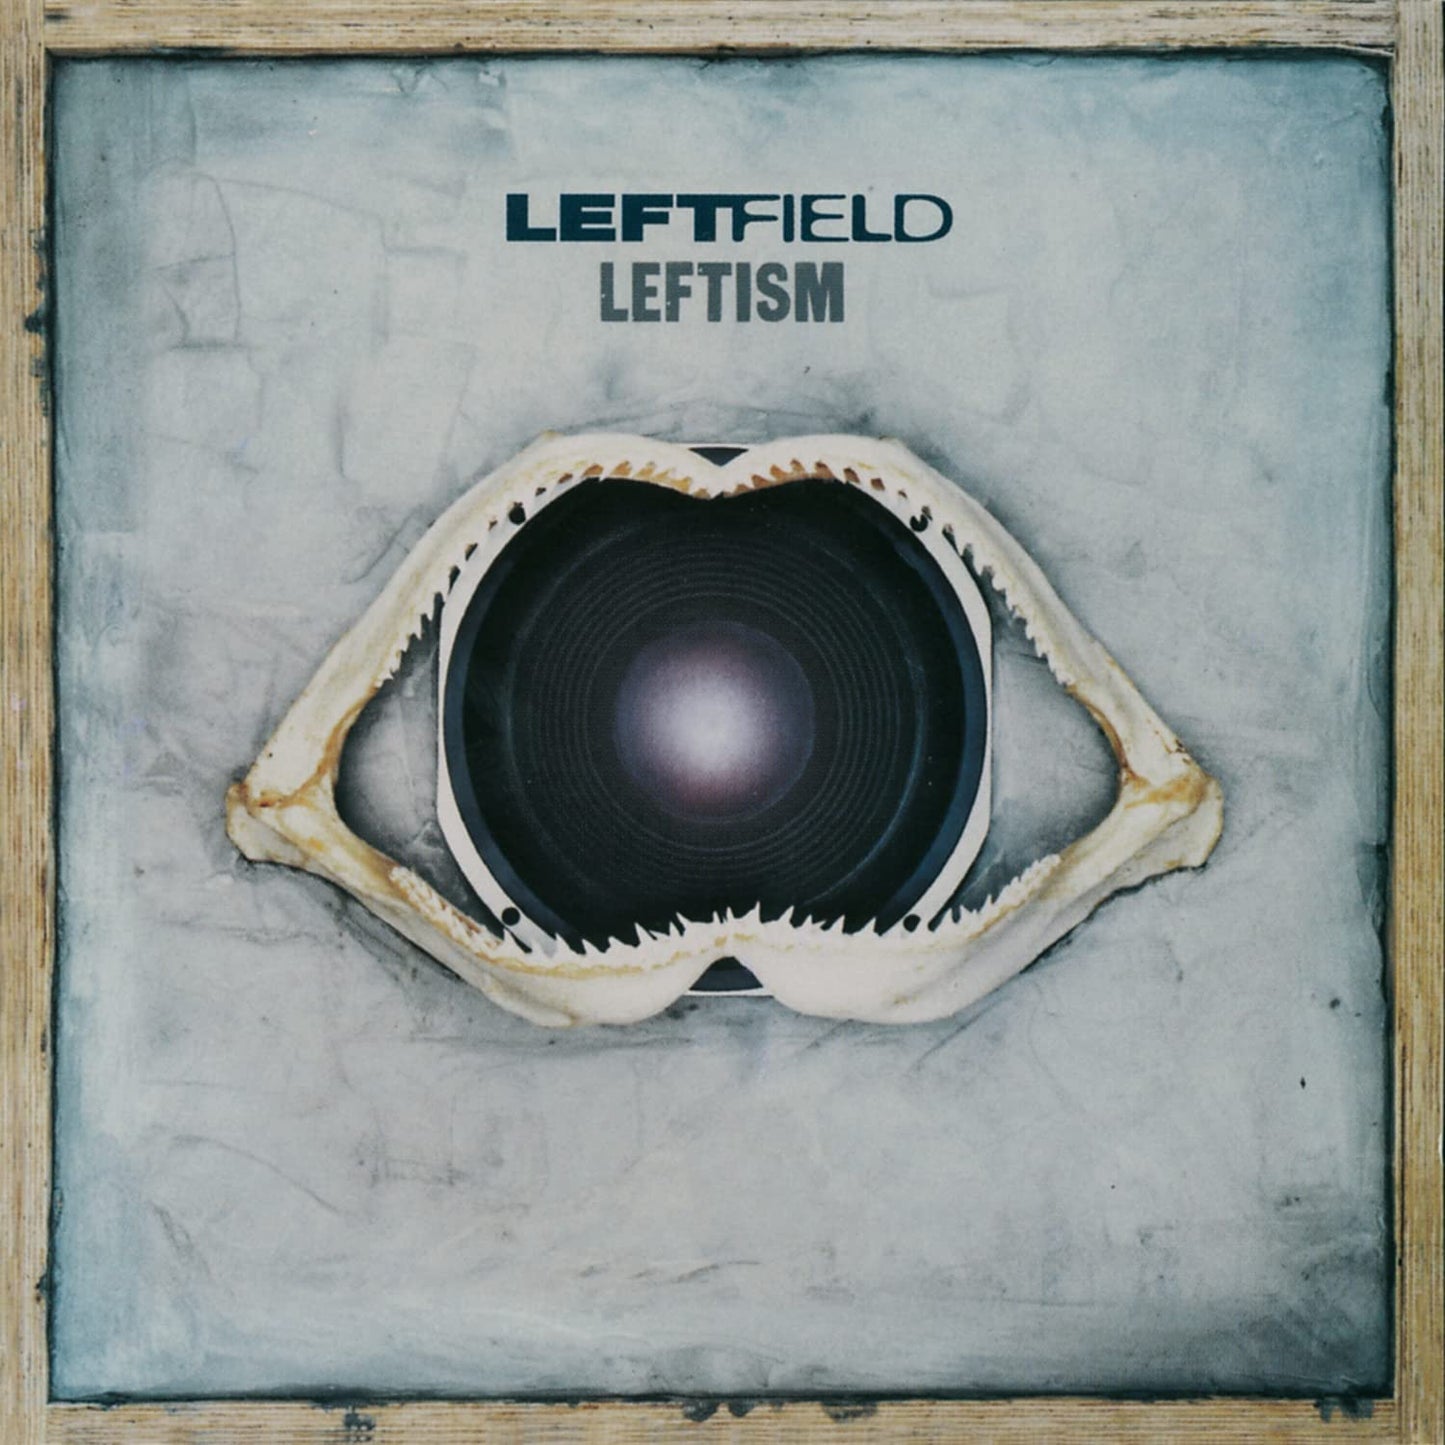 Leftfield Leftism - Ireland Vinyl